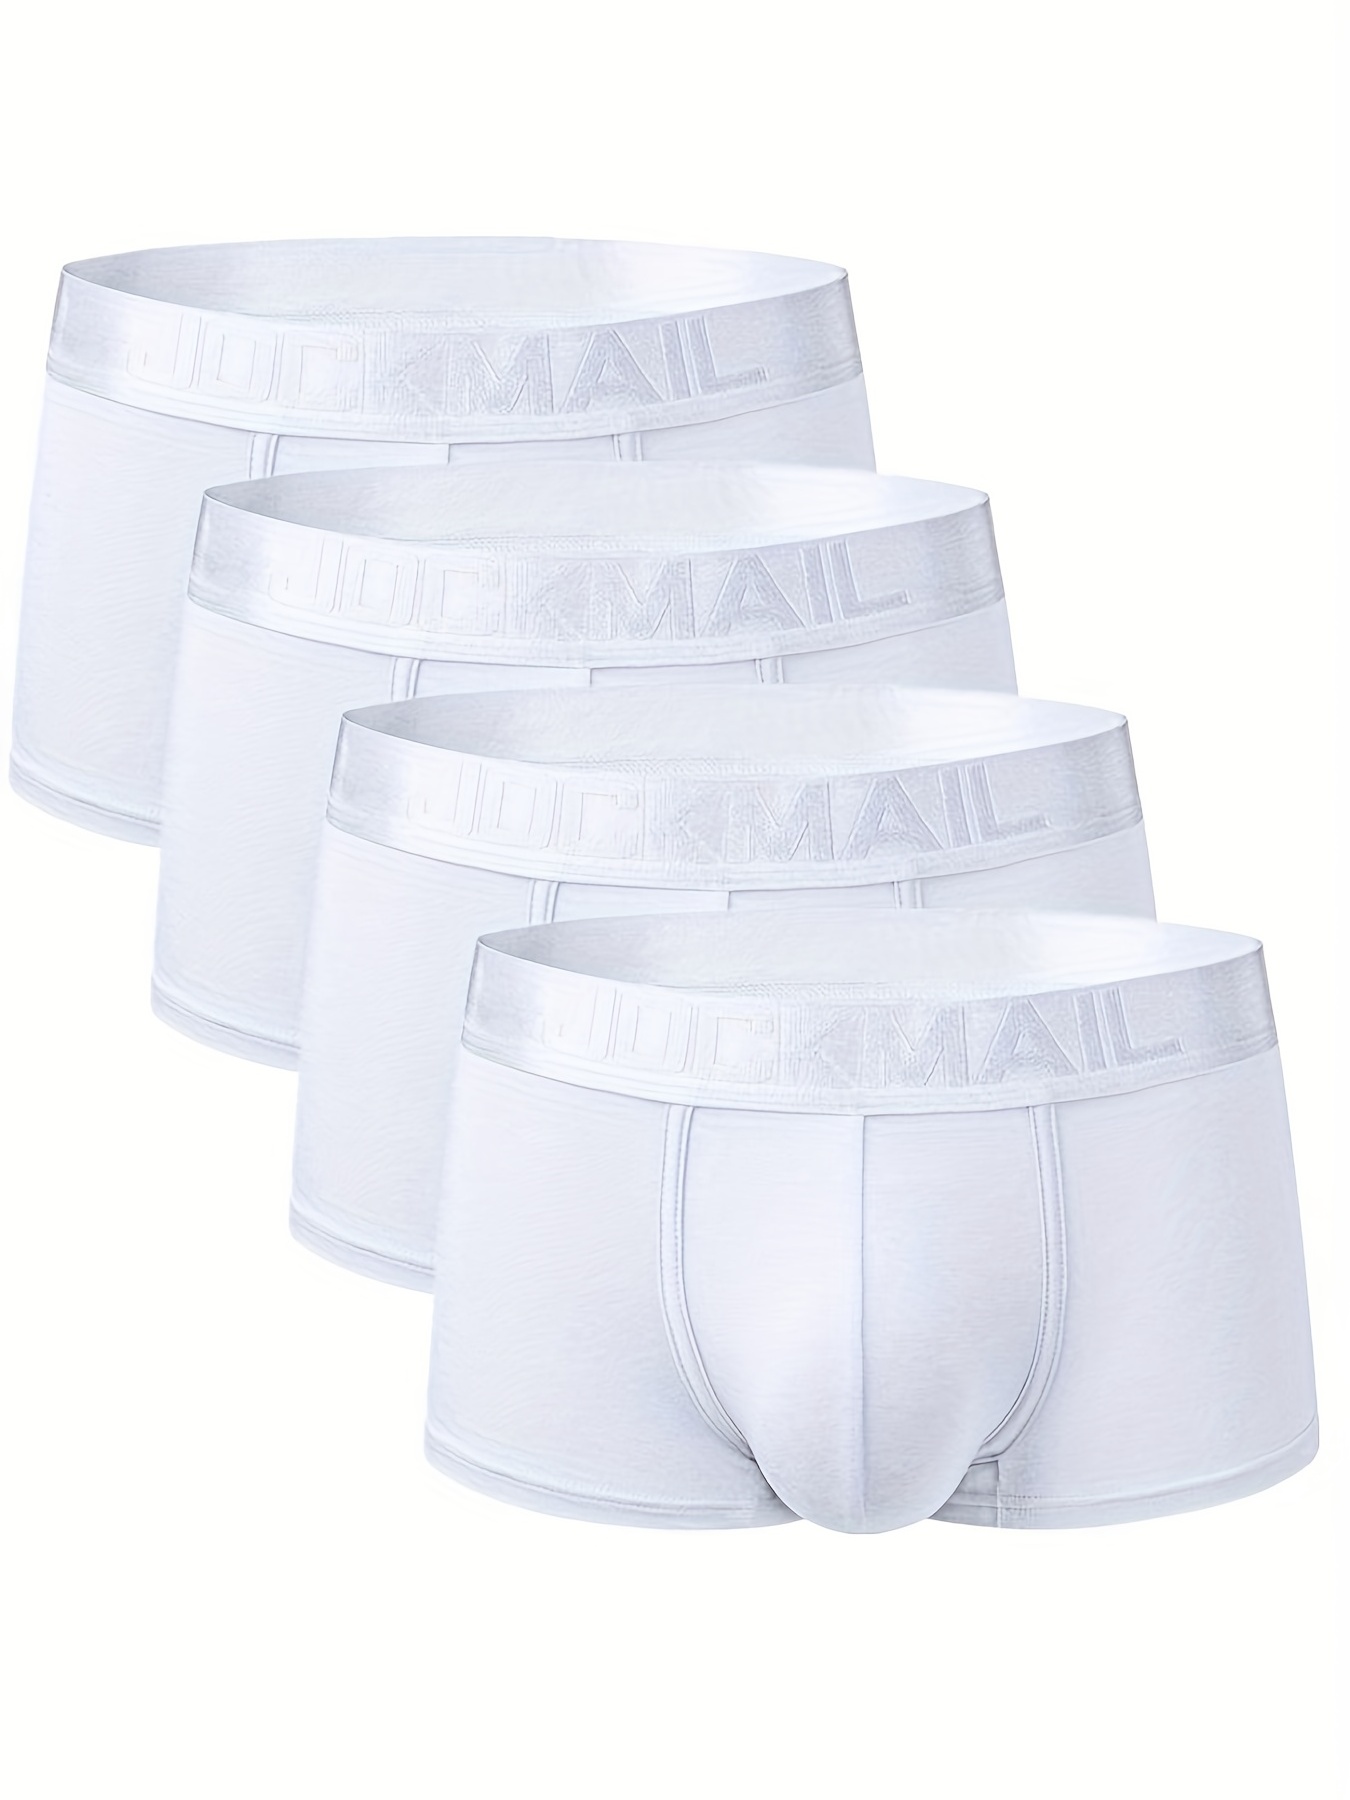 JOCKMAIL Men's Cotton Briefs Sexy High Cut Sport Panties Low-waist